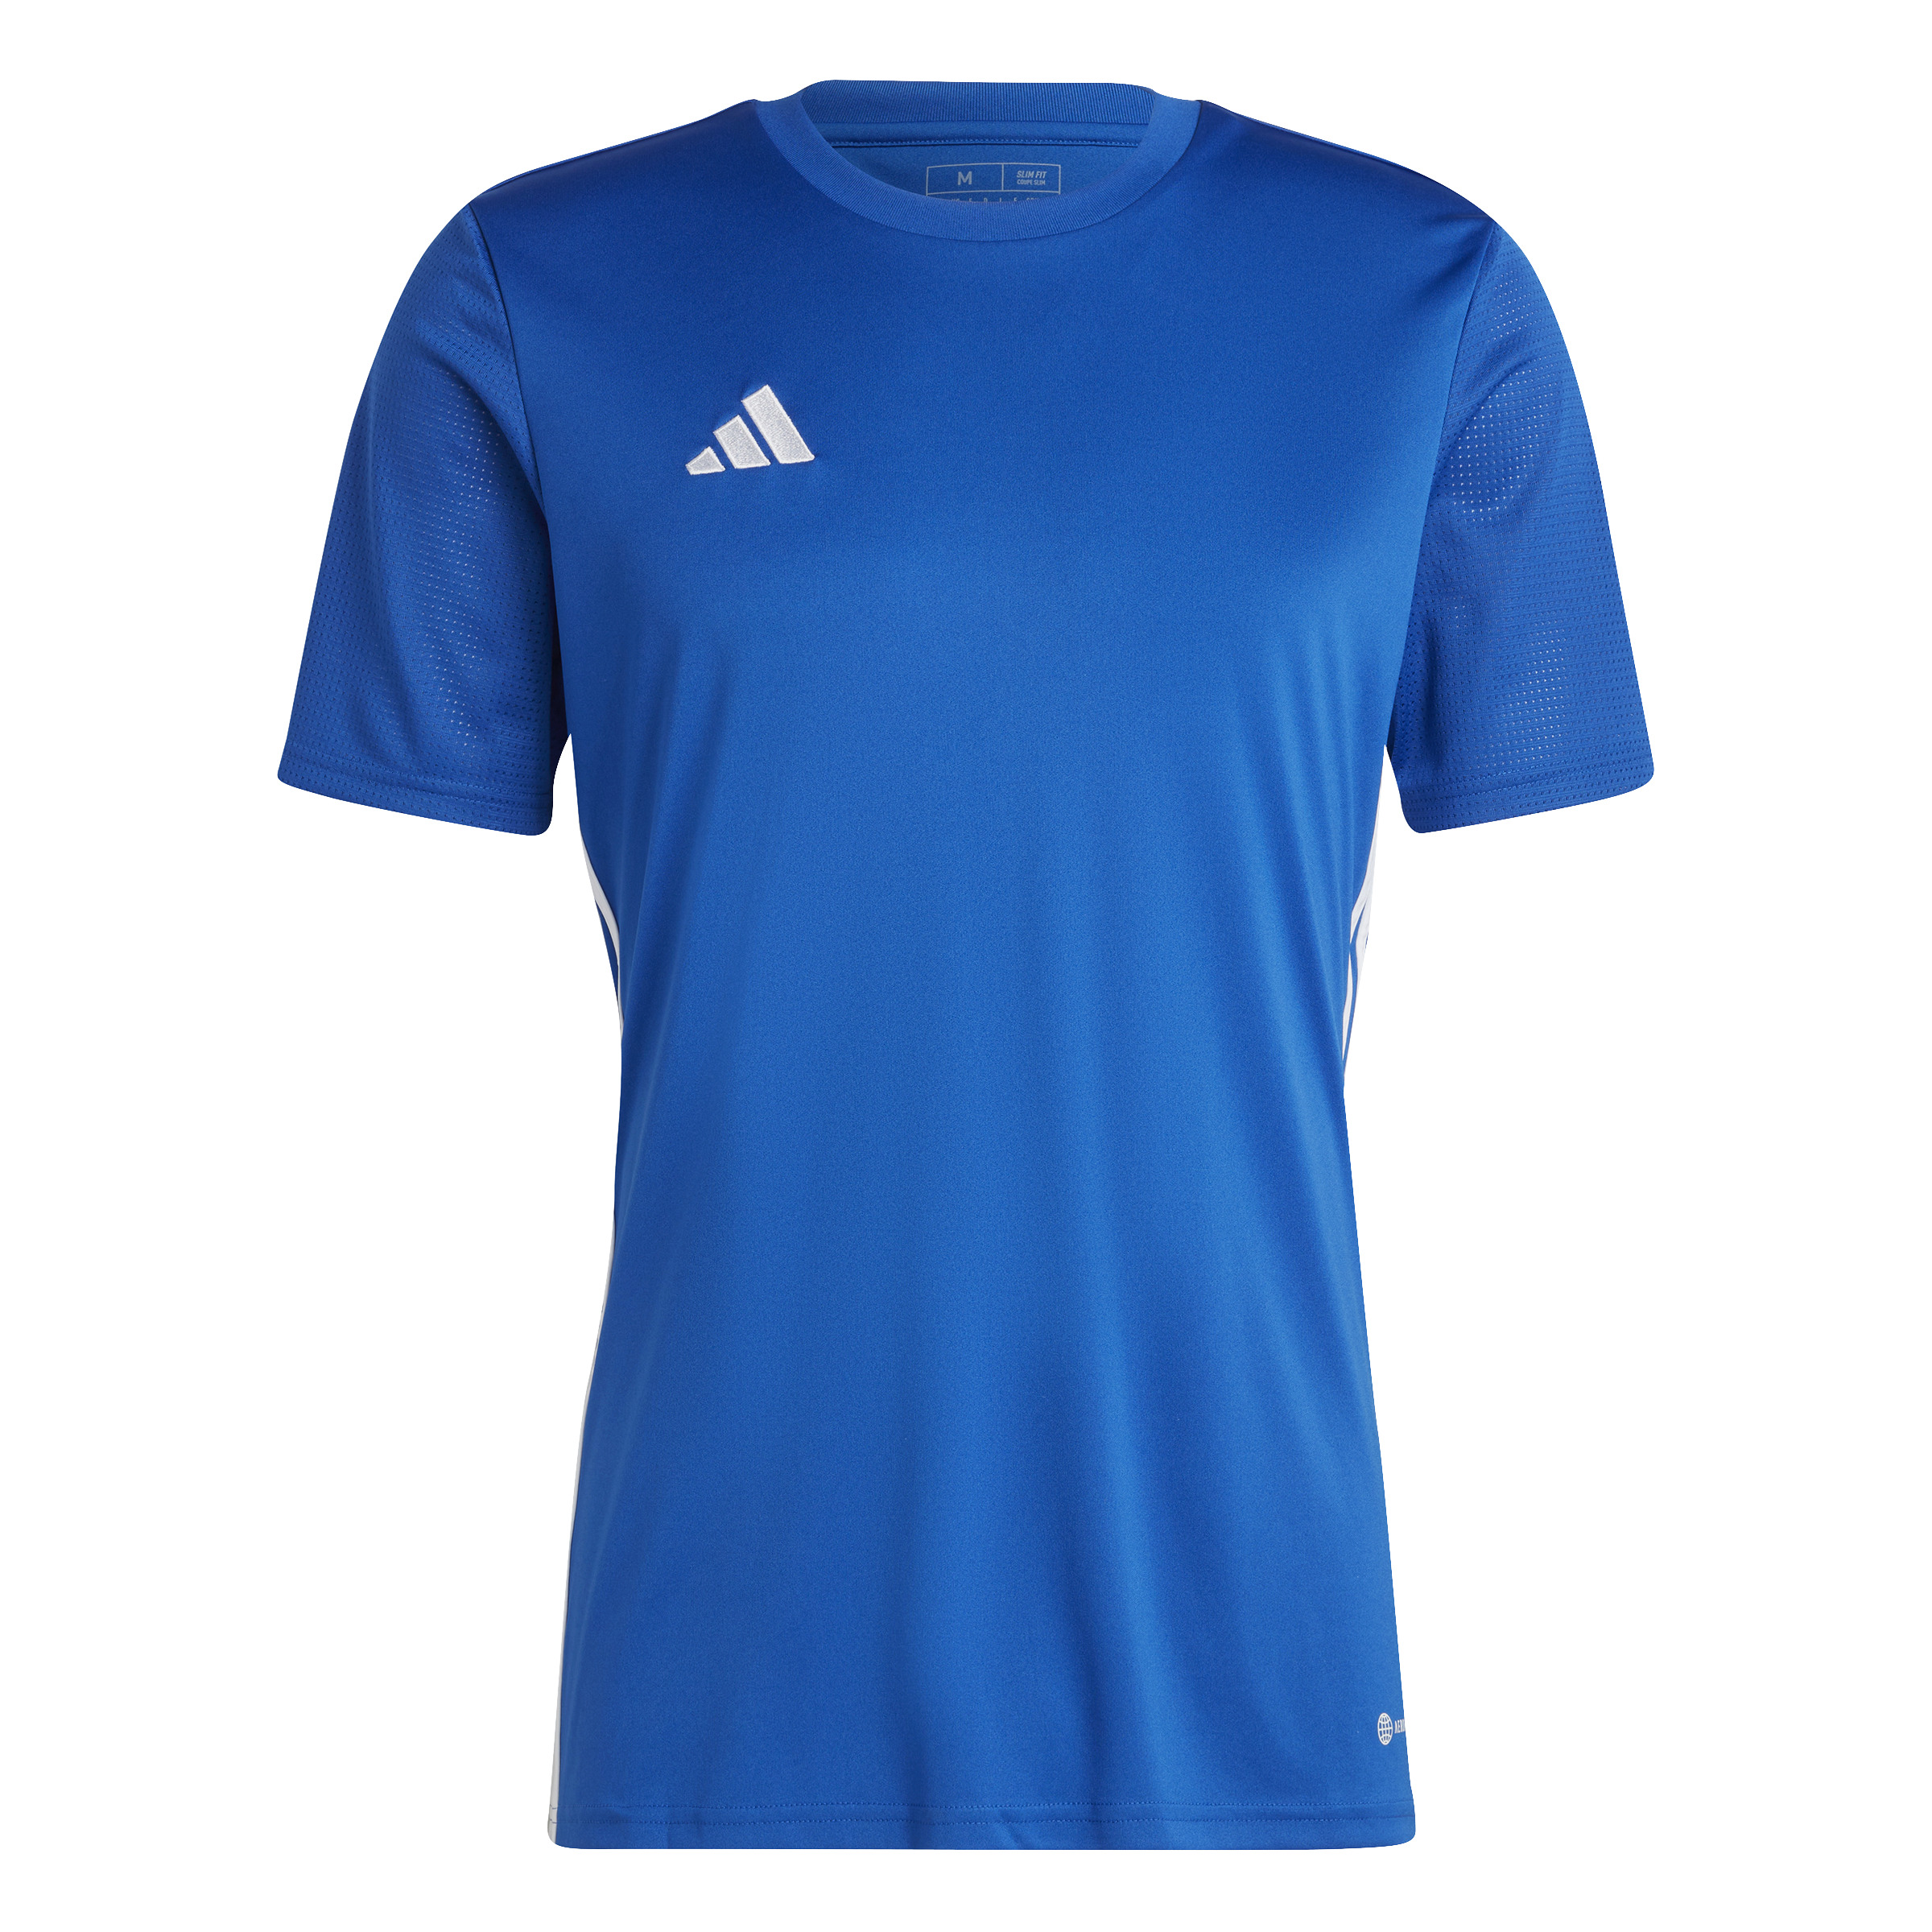 Adidas Tabela 23 Jersey - Team Royal Blue / White - Total Football Direct